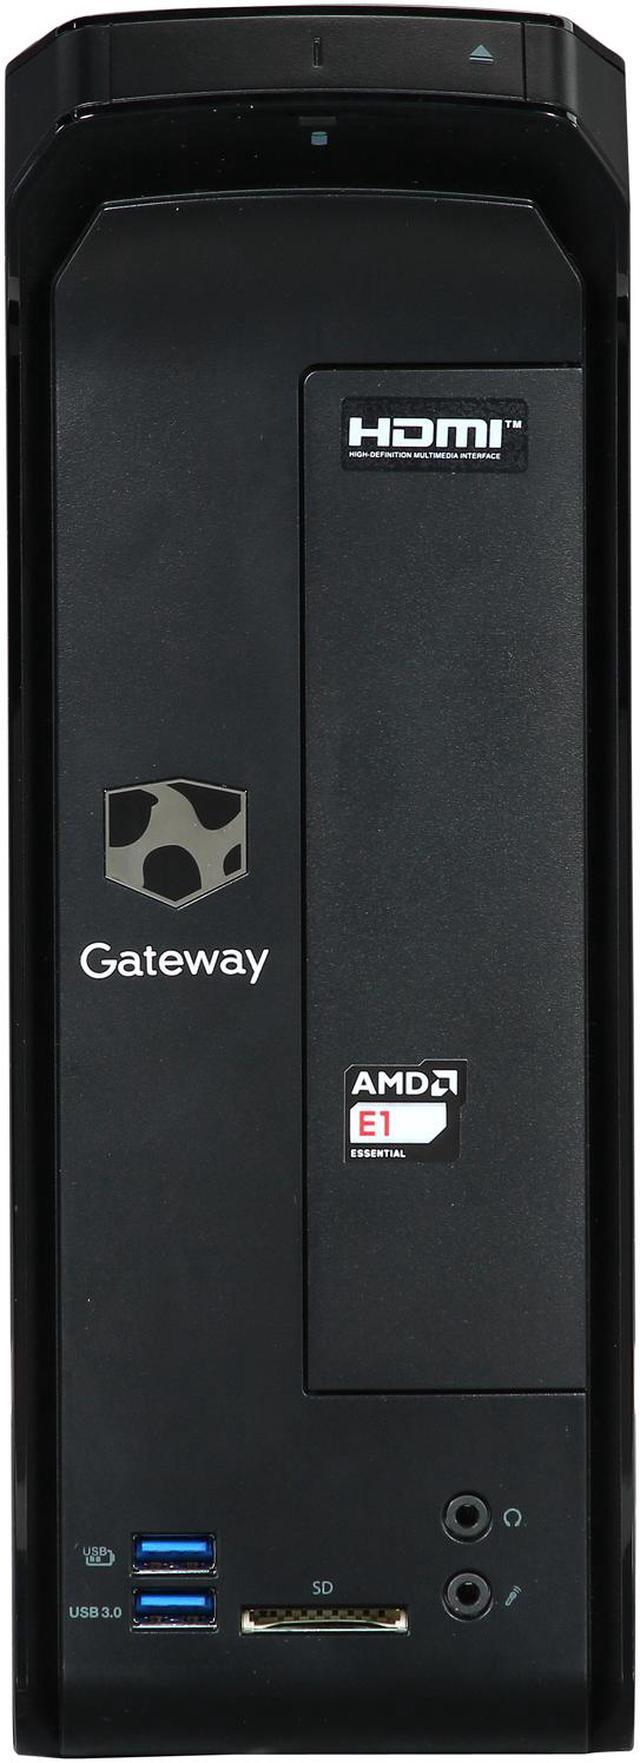 Refurbished: Gateway Desktop PC SX2185-UB37 E1-2500 (1.40GHz) 4GB 